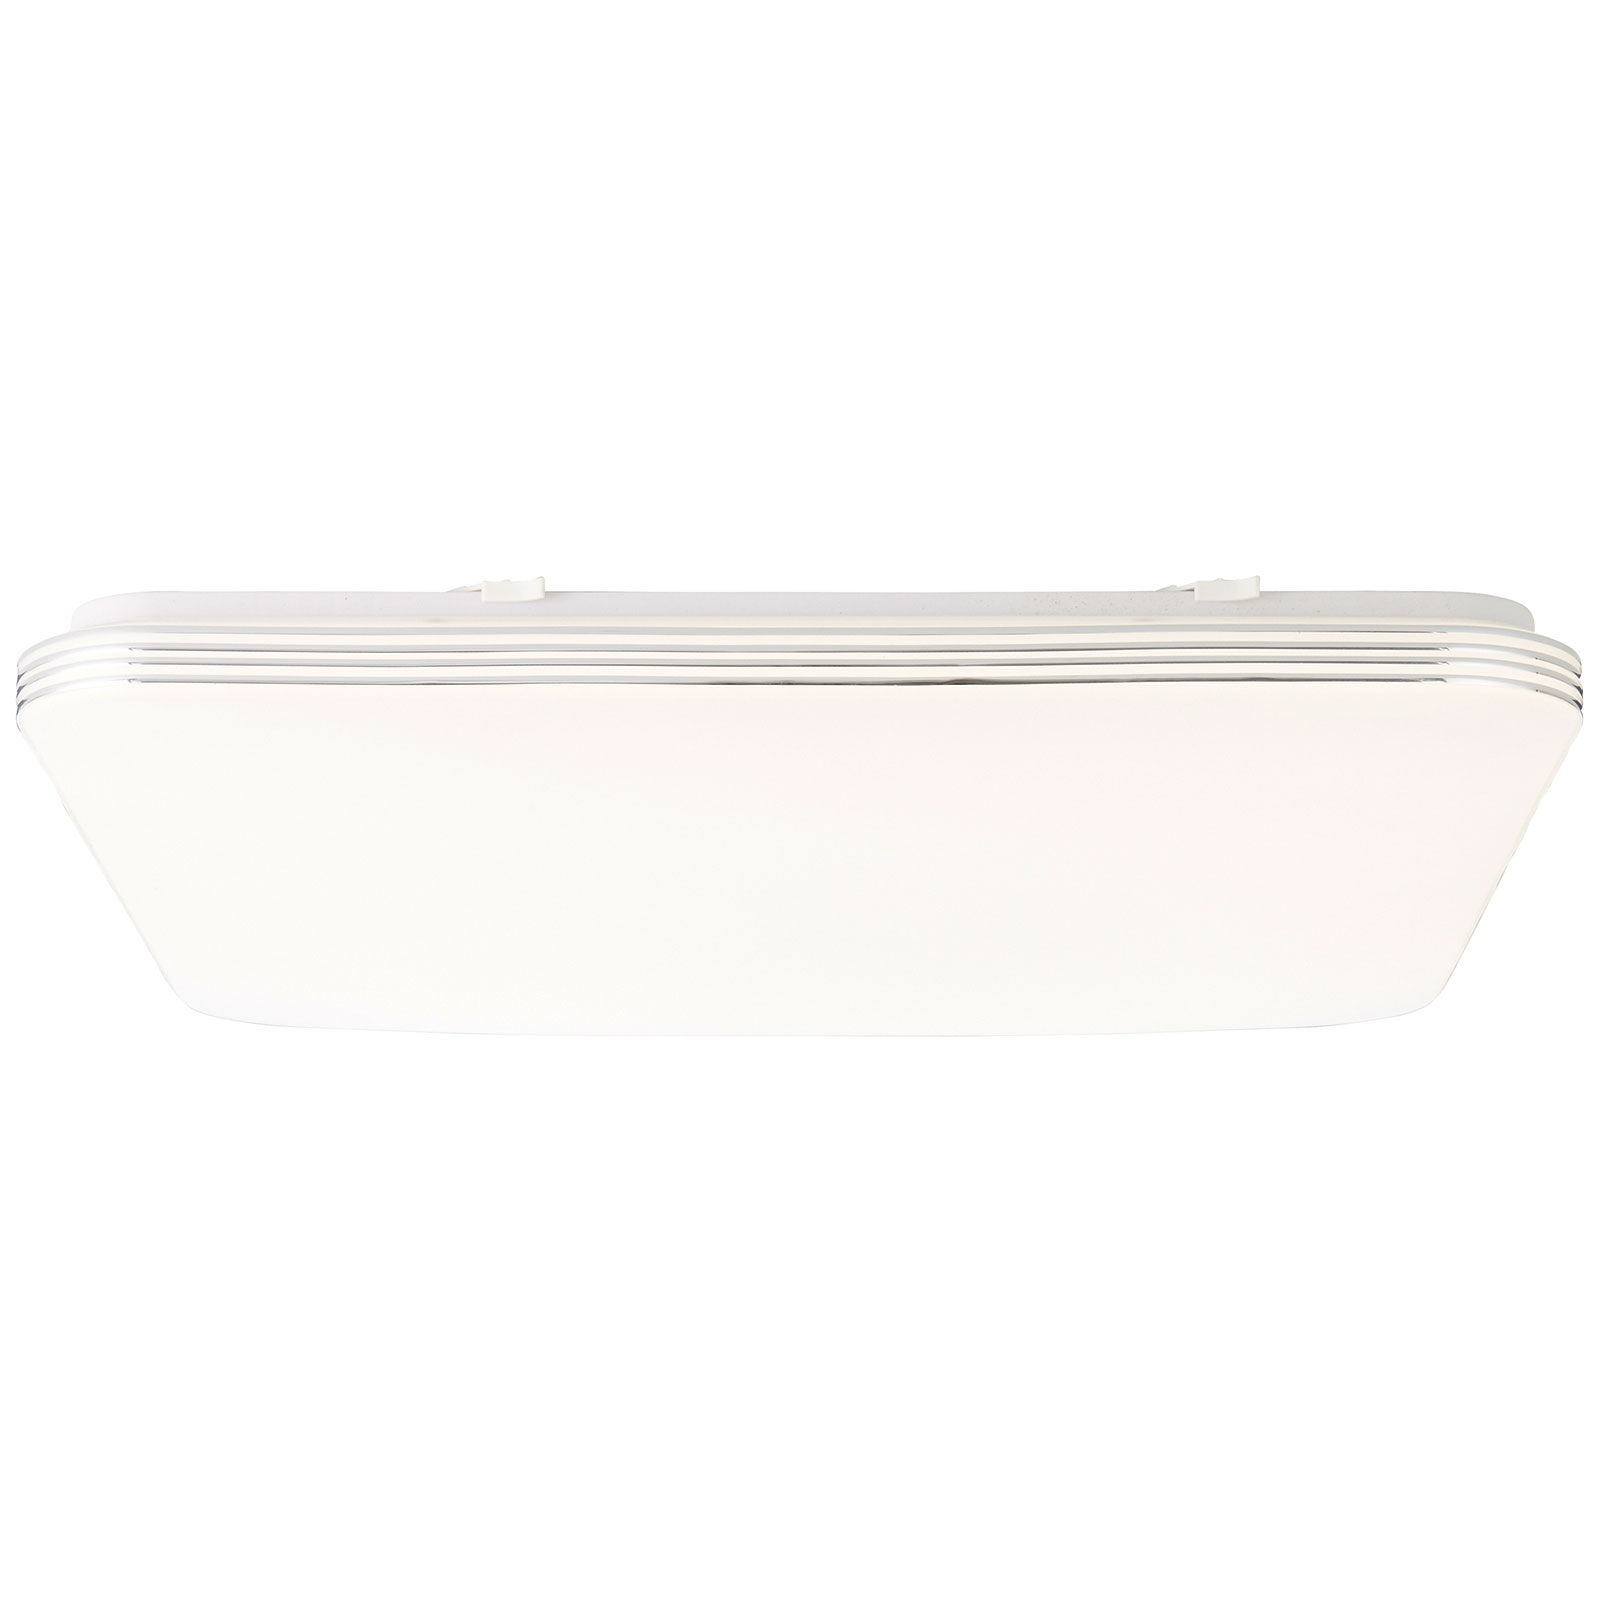 Ariella LED ceiling light in white/chrome 54x54 cm